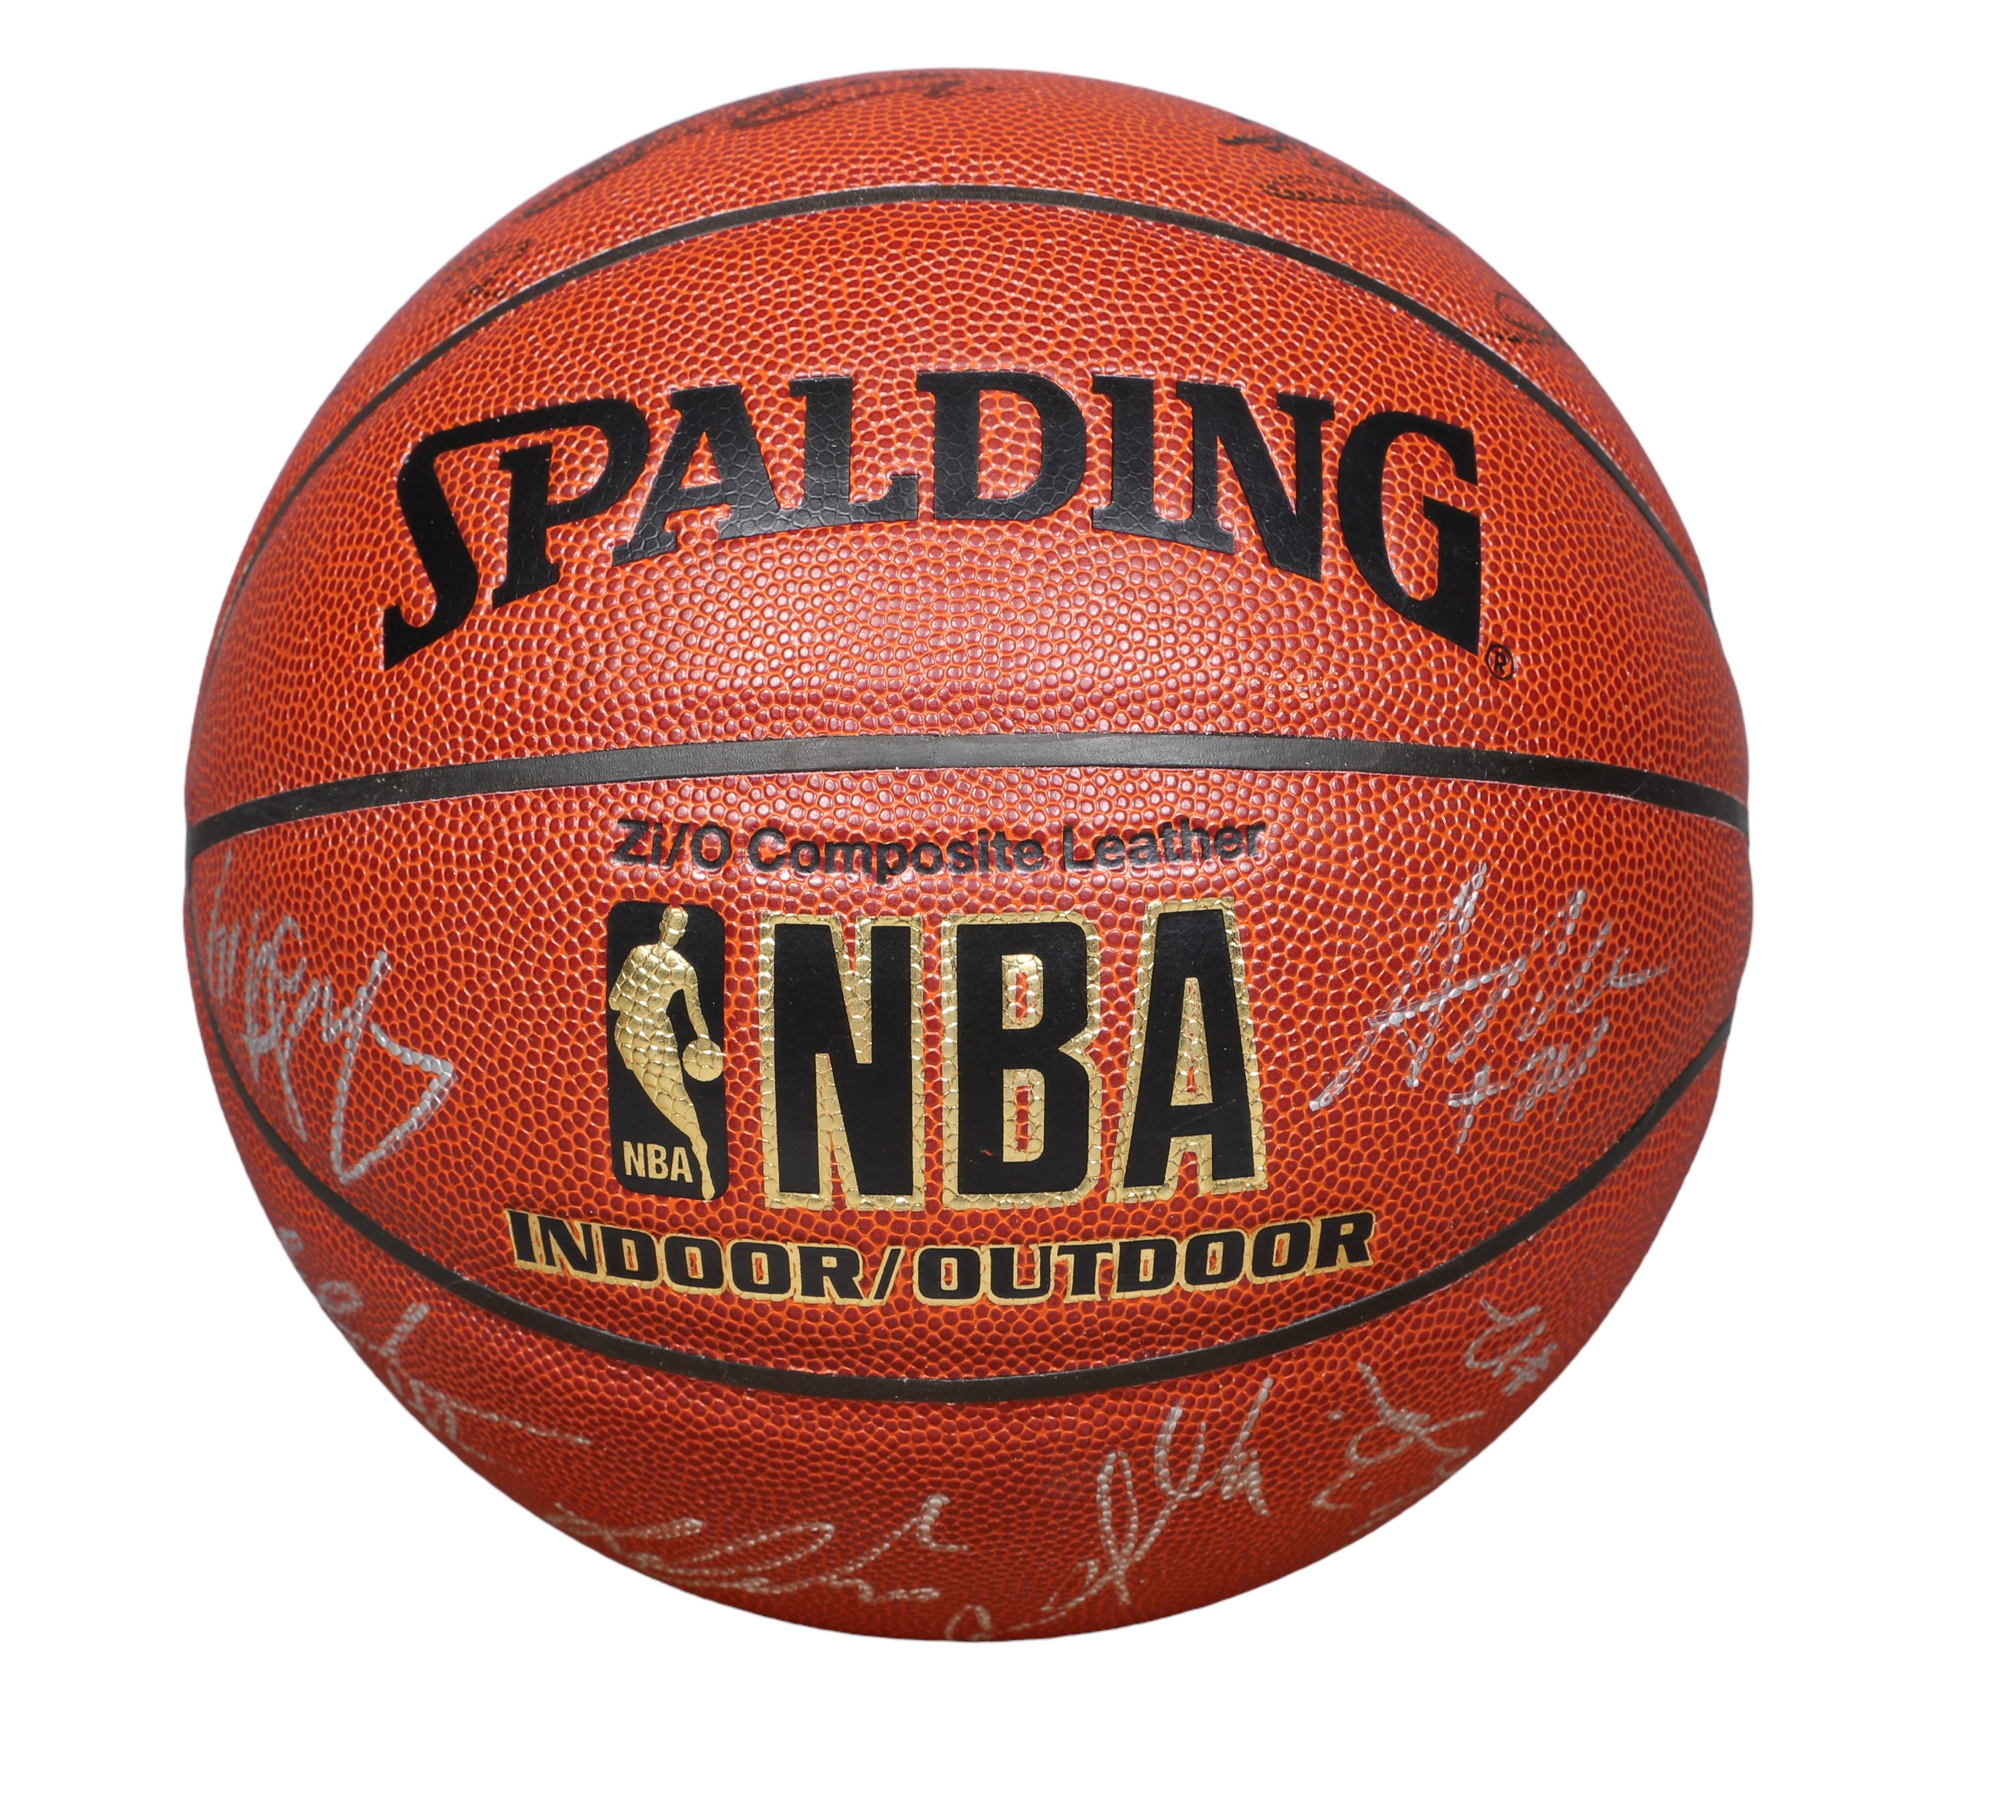 Team signed Spalding NBA basketball,